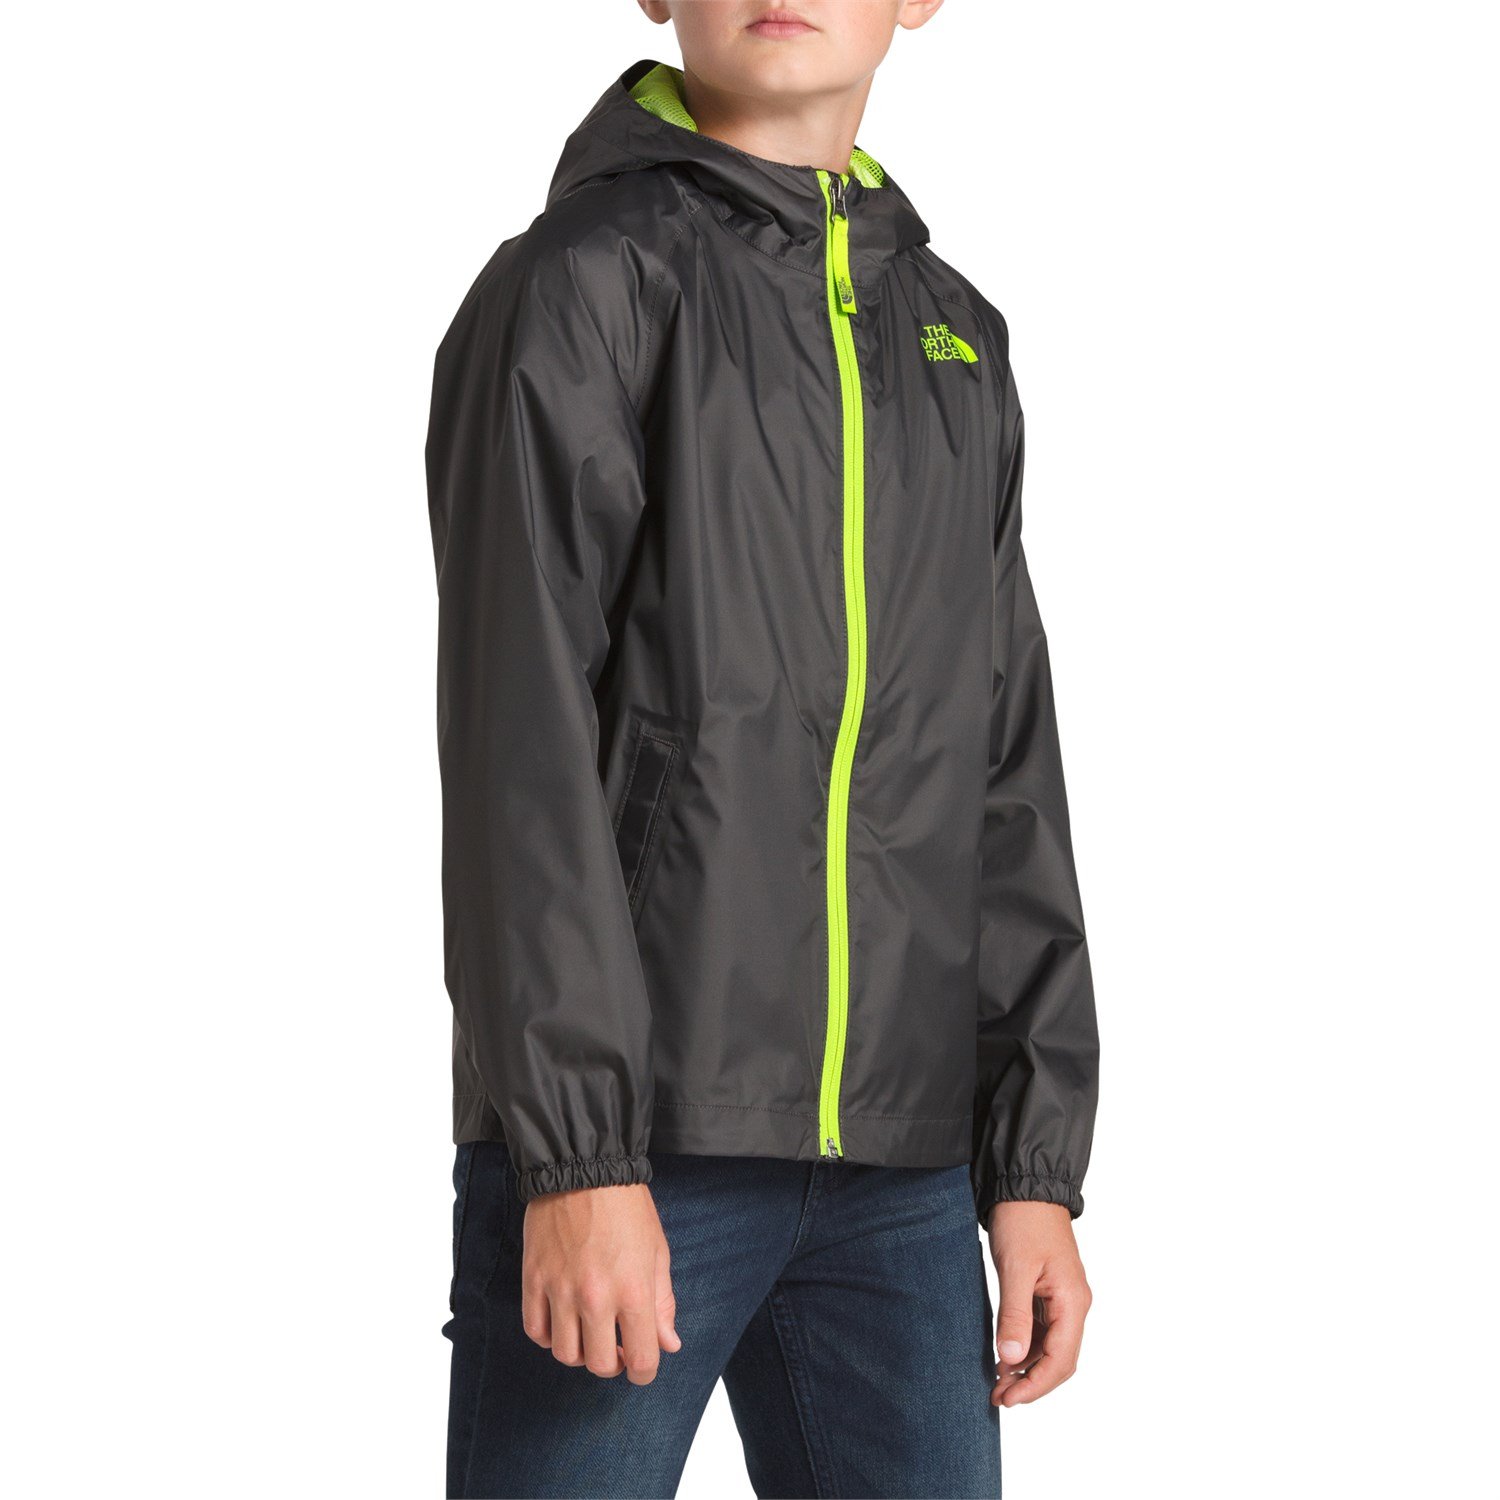 north face youth zipline rain jacket